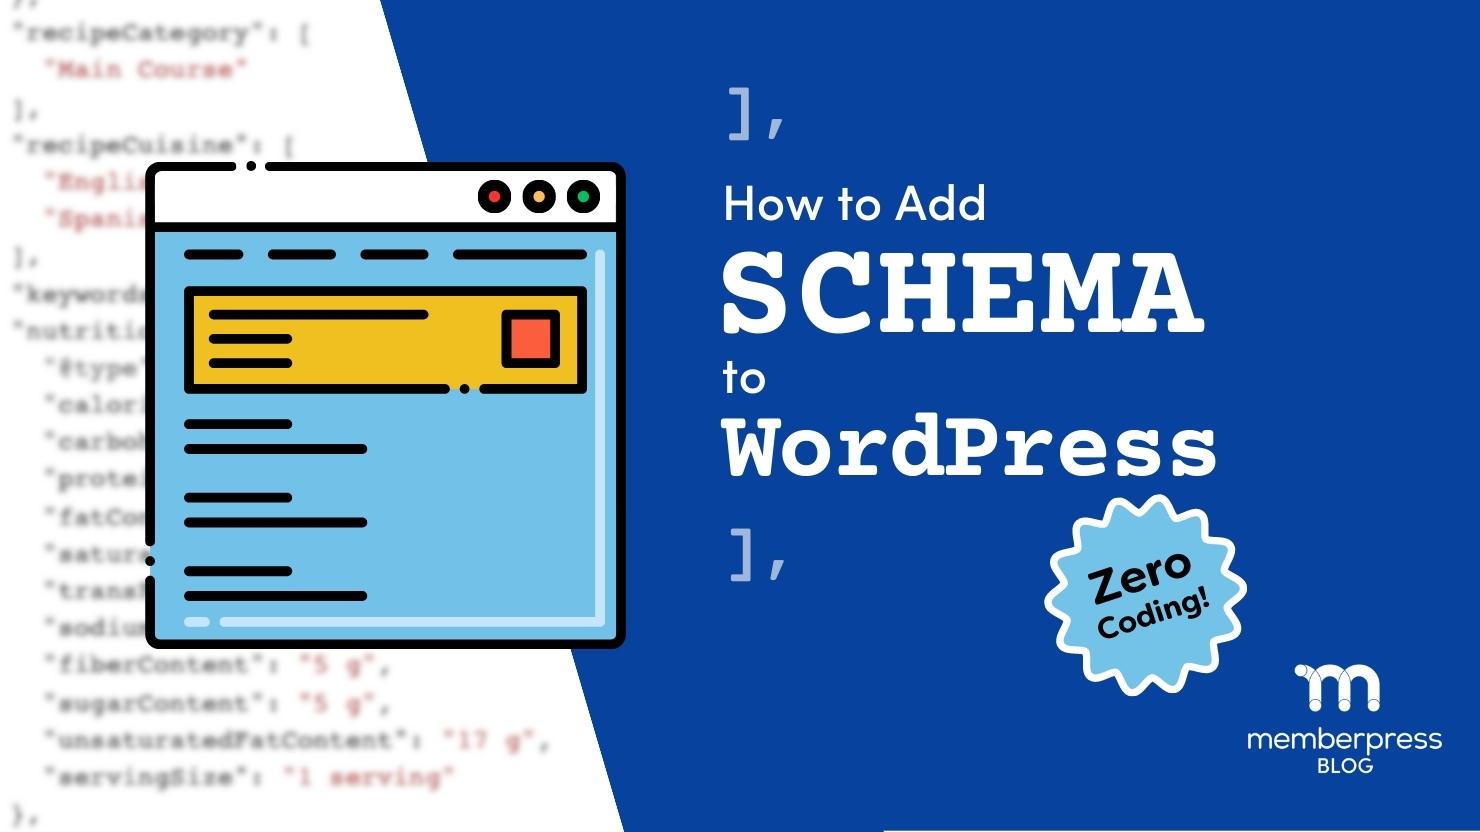 How to Add Schema to WordPress.